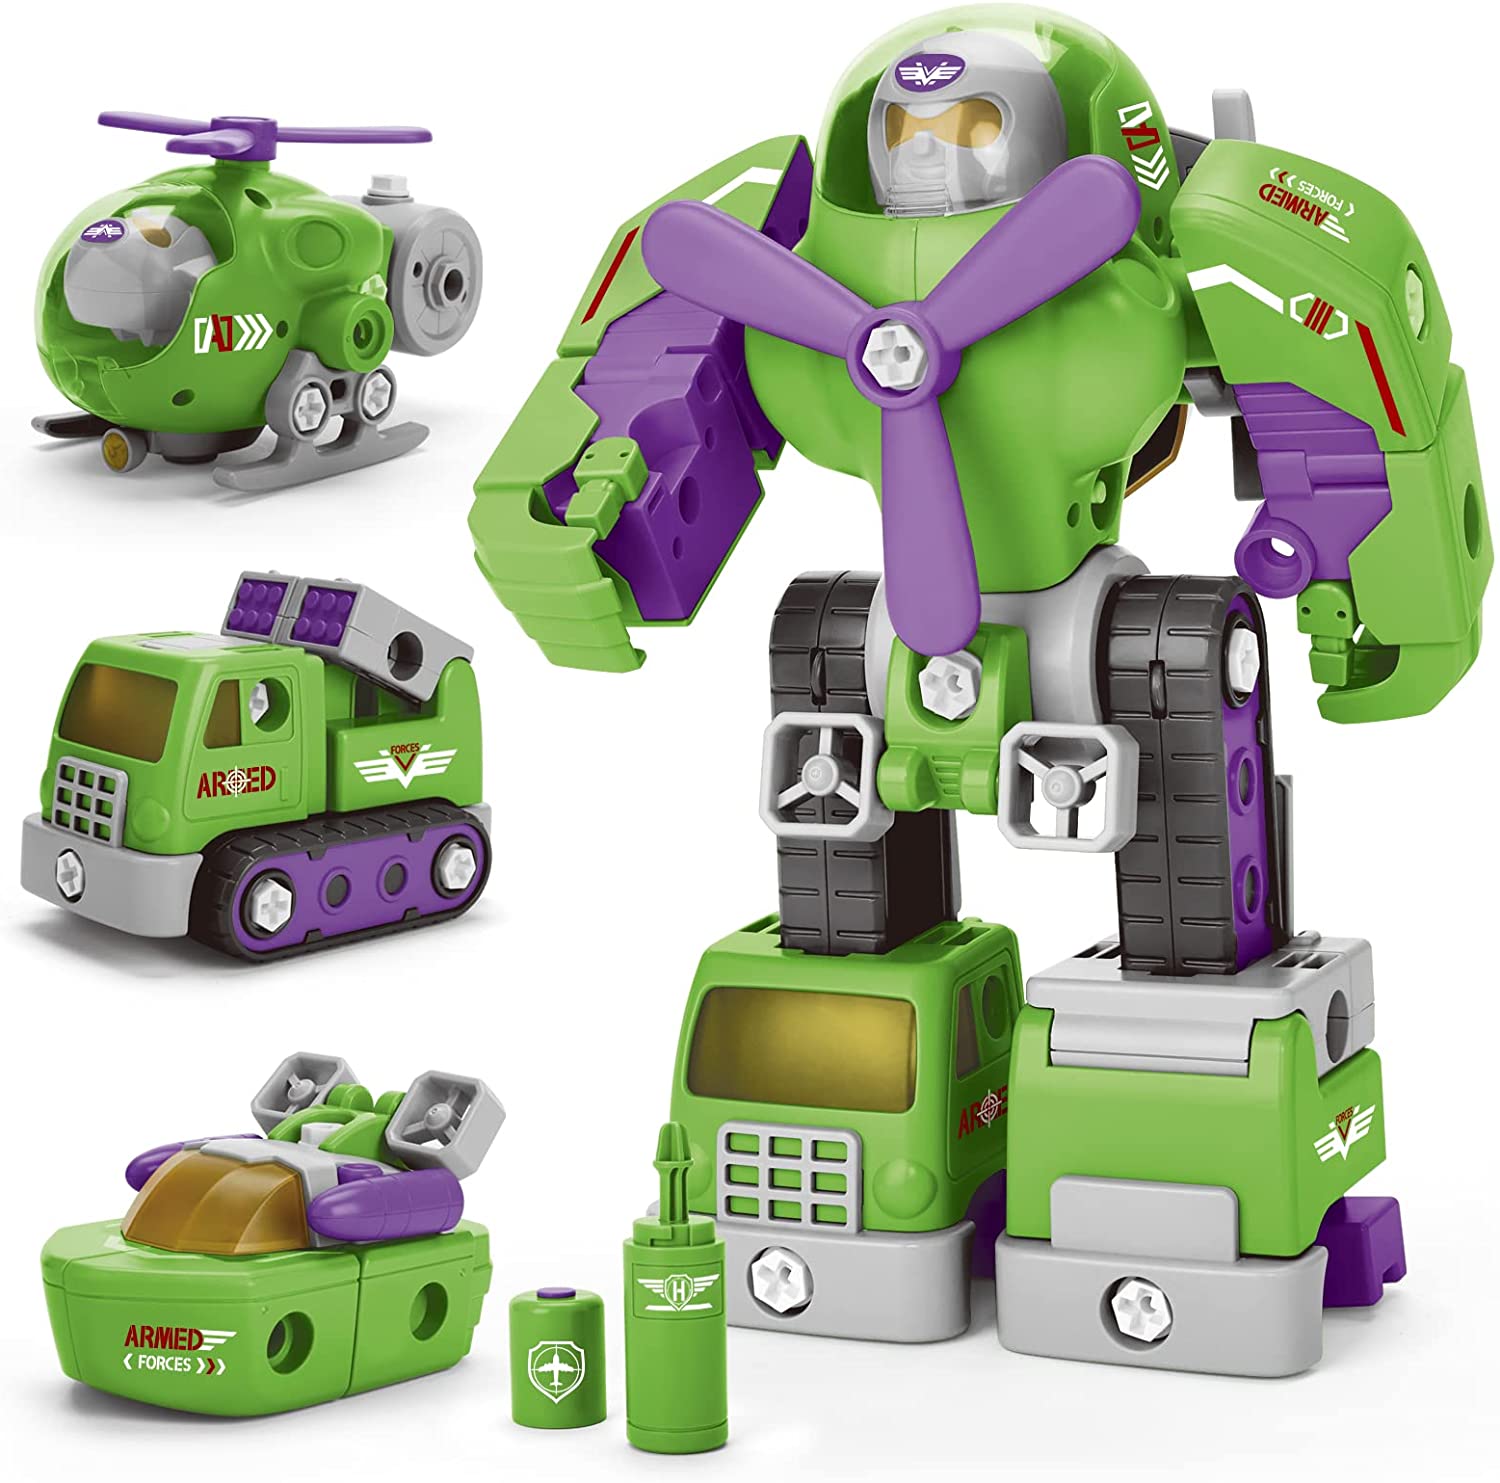 Take apart transform robot toys for boys girls – Hahaland